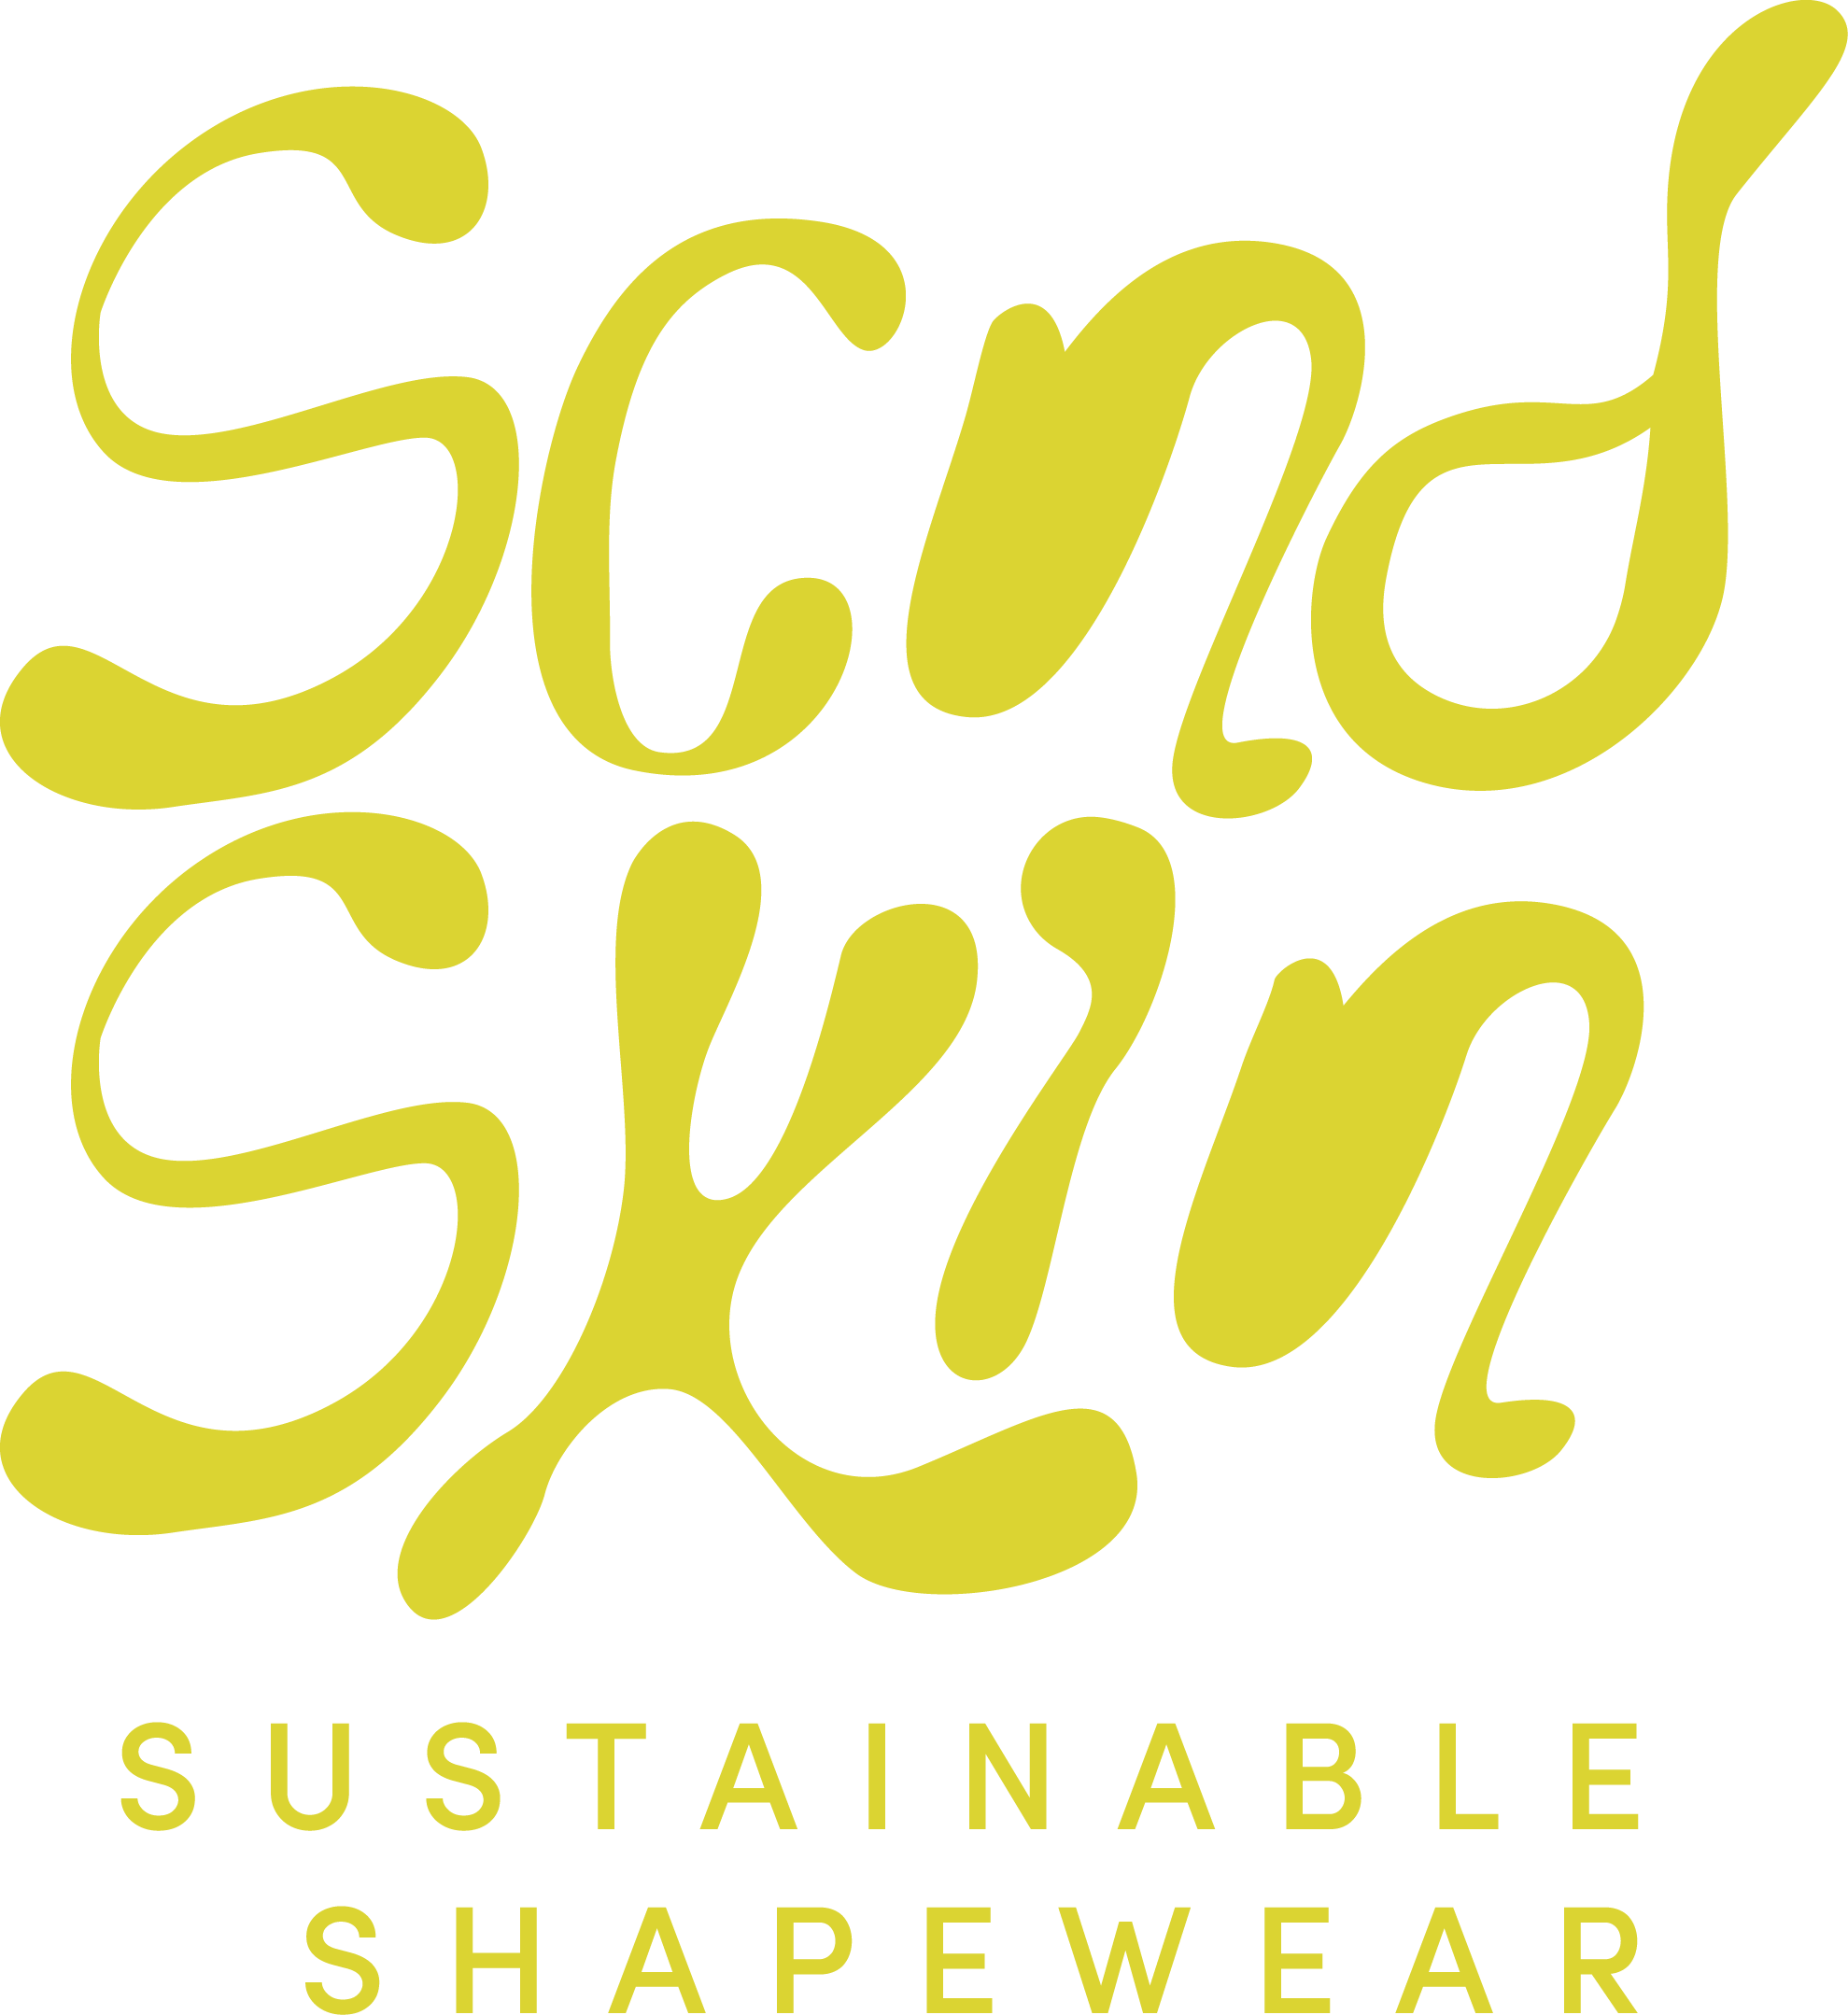 Sustainability – SCND SKIN